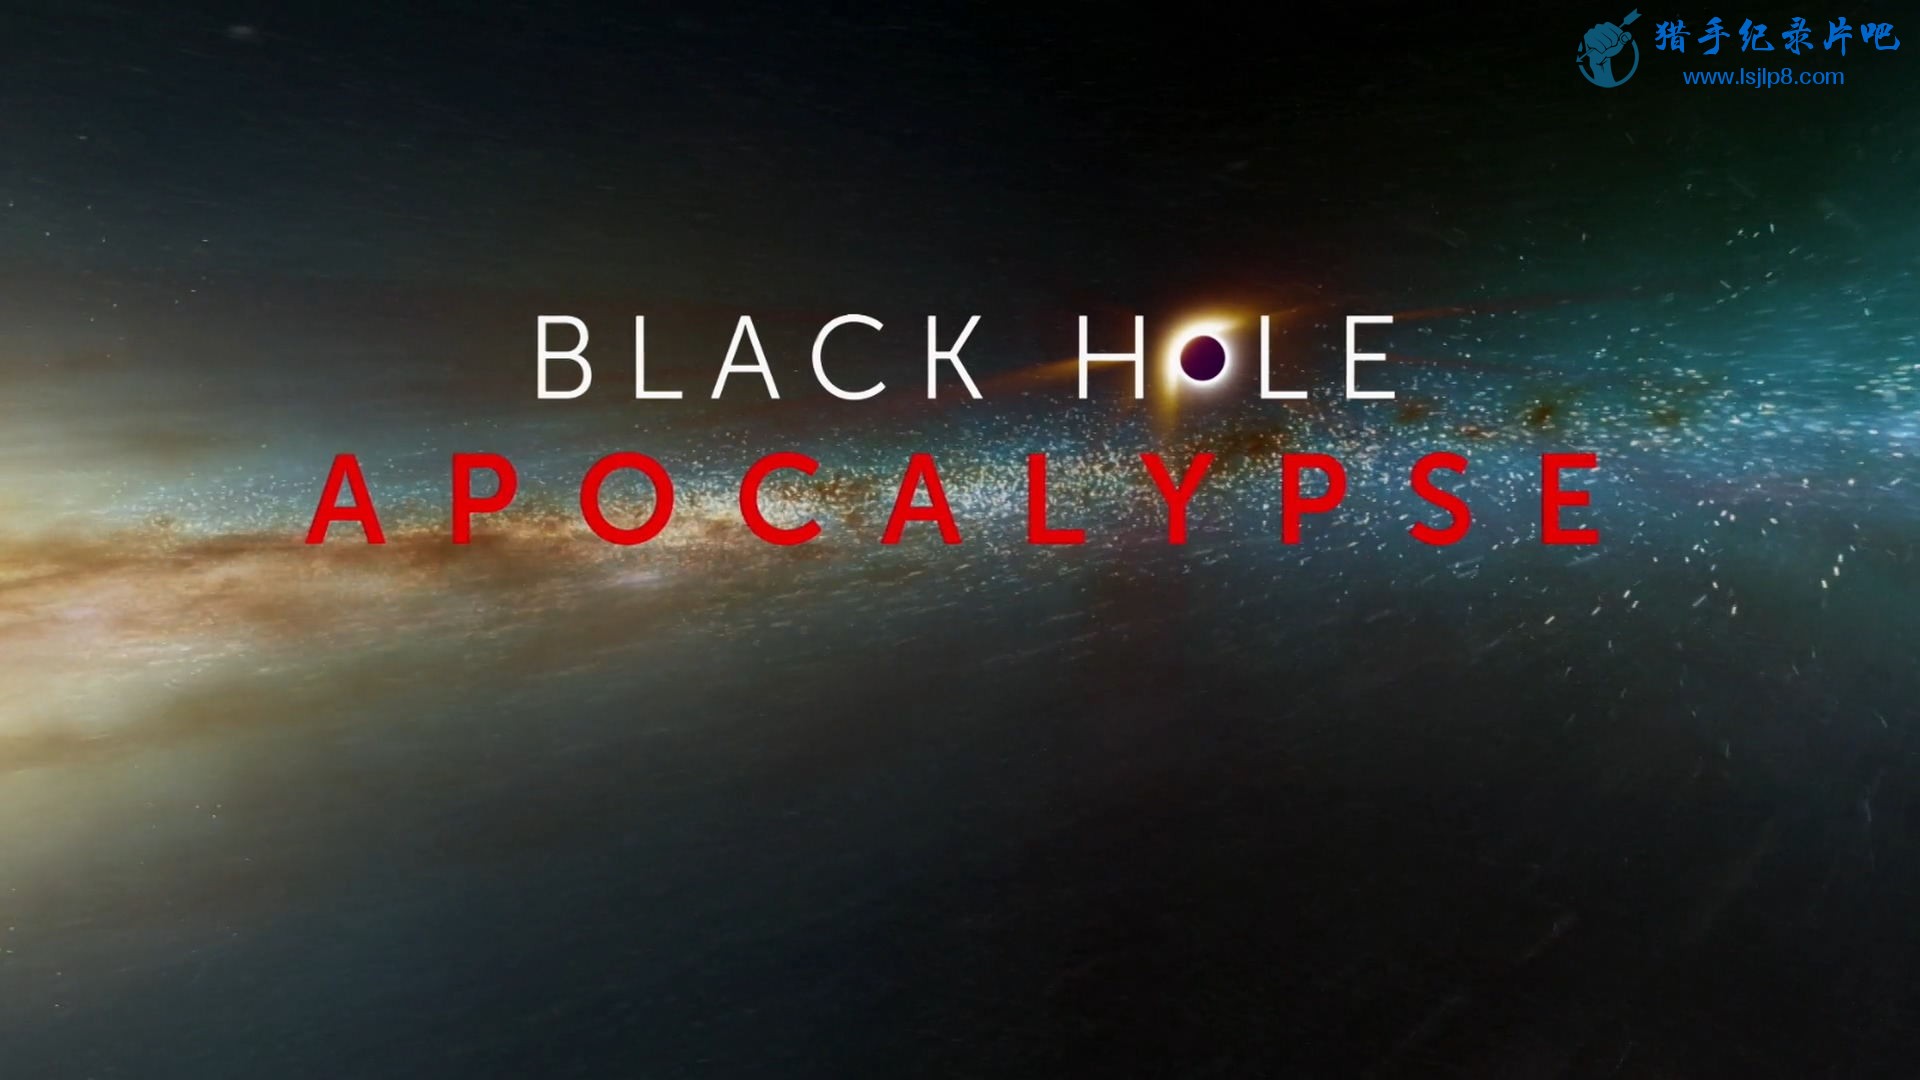 Nova.Black.Hole.Apocalypse.2018.1080p.NF.WEB-DL.DDP2.0.x264-AO.mkv_20200520_0919.jpg